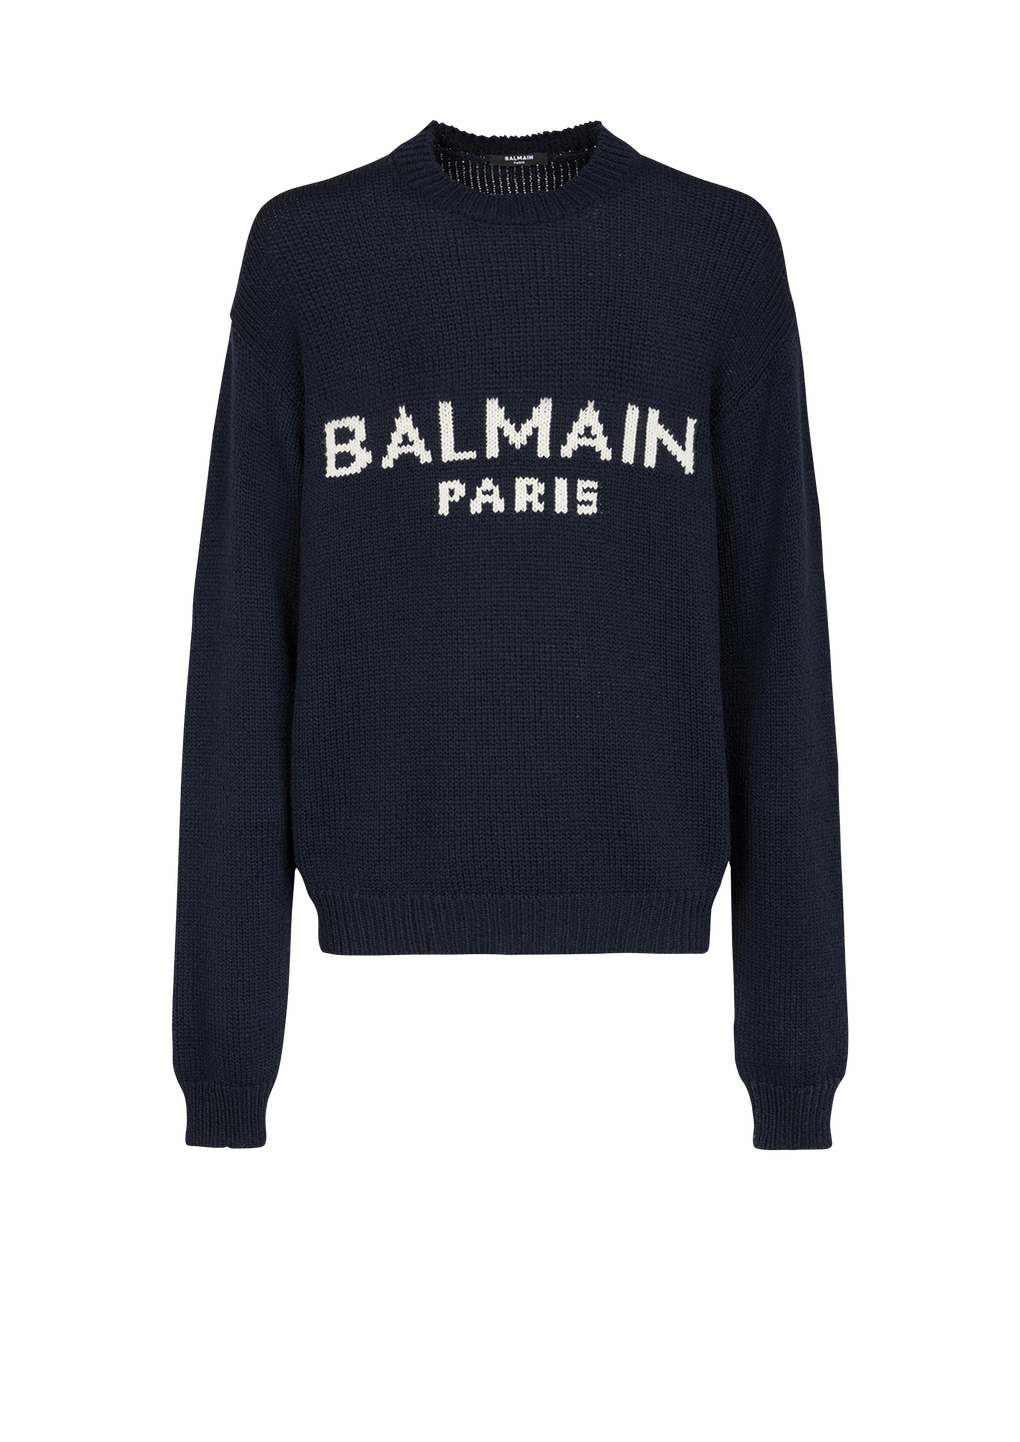 Wool sweater with Balmain Paris logo, black, hi-res